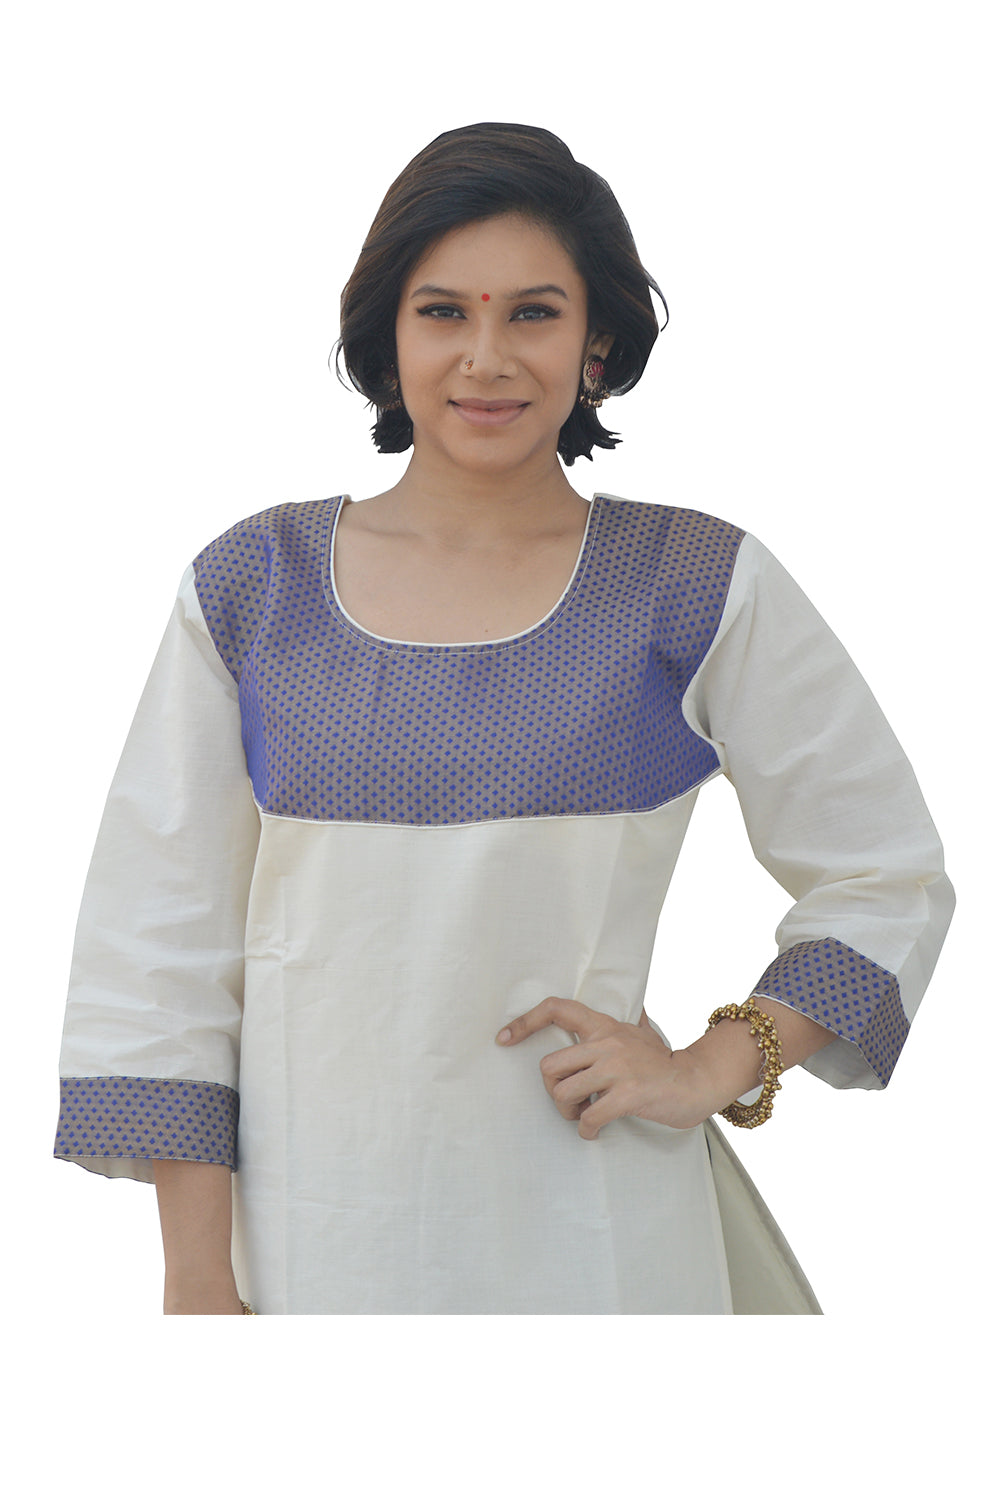 Southloom Kerala Women's Salwar / Churidar Top with Violet Design